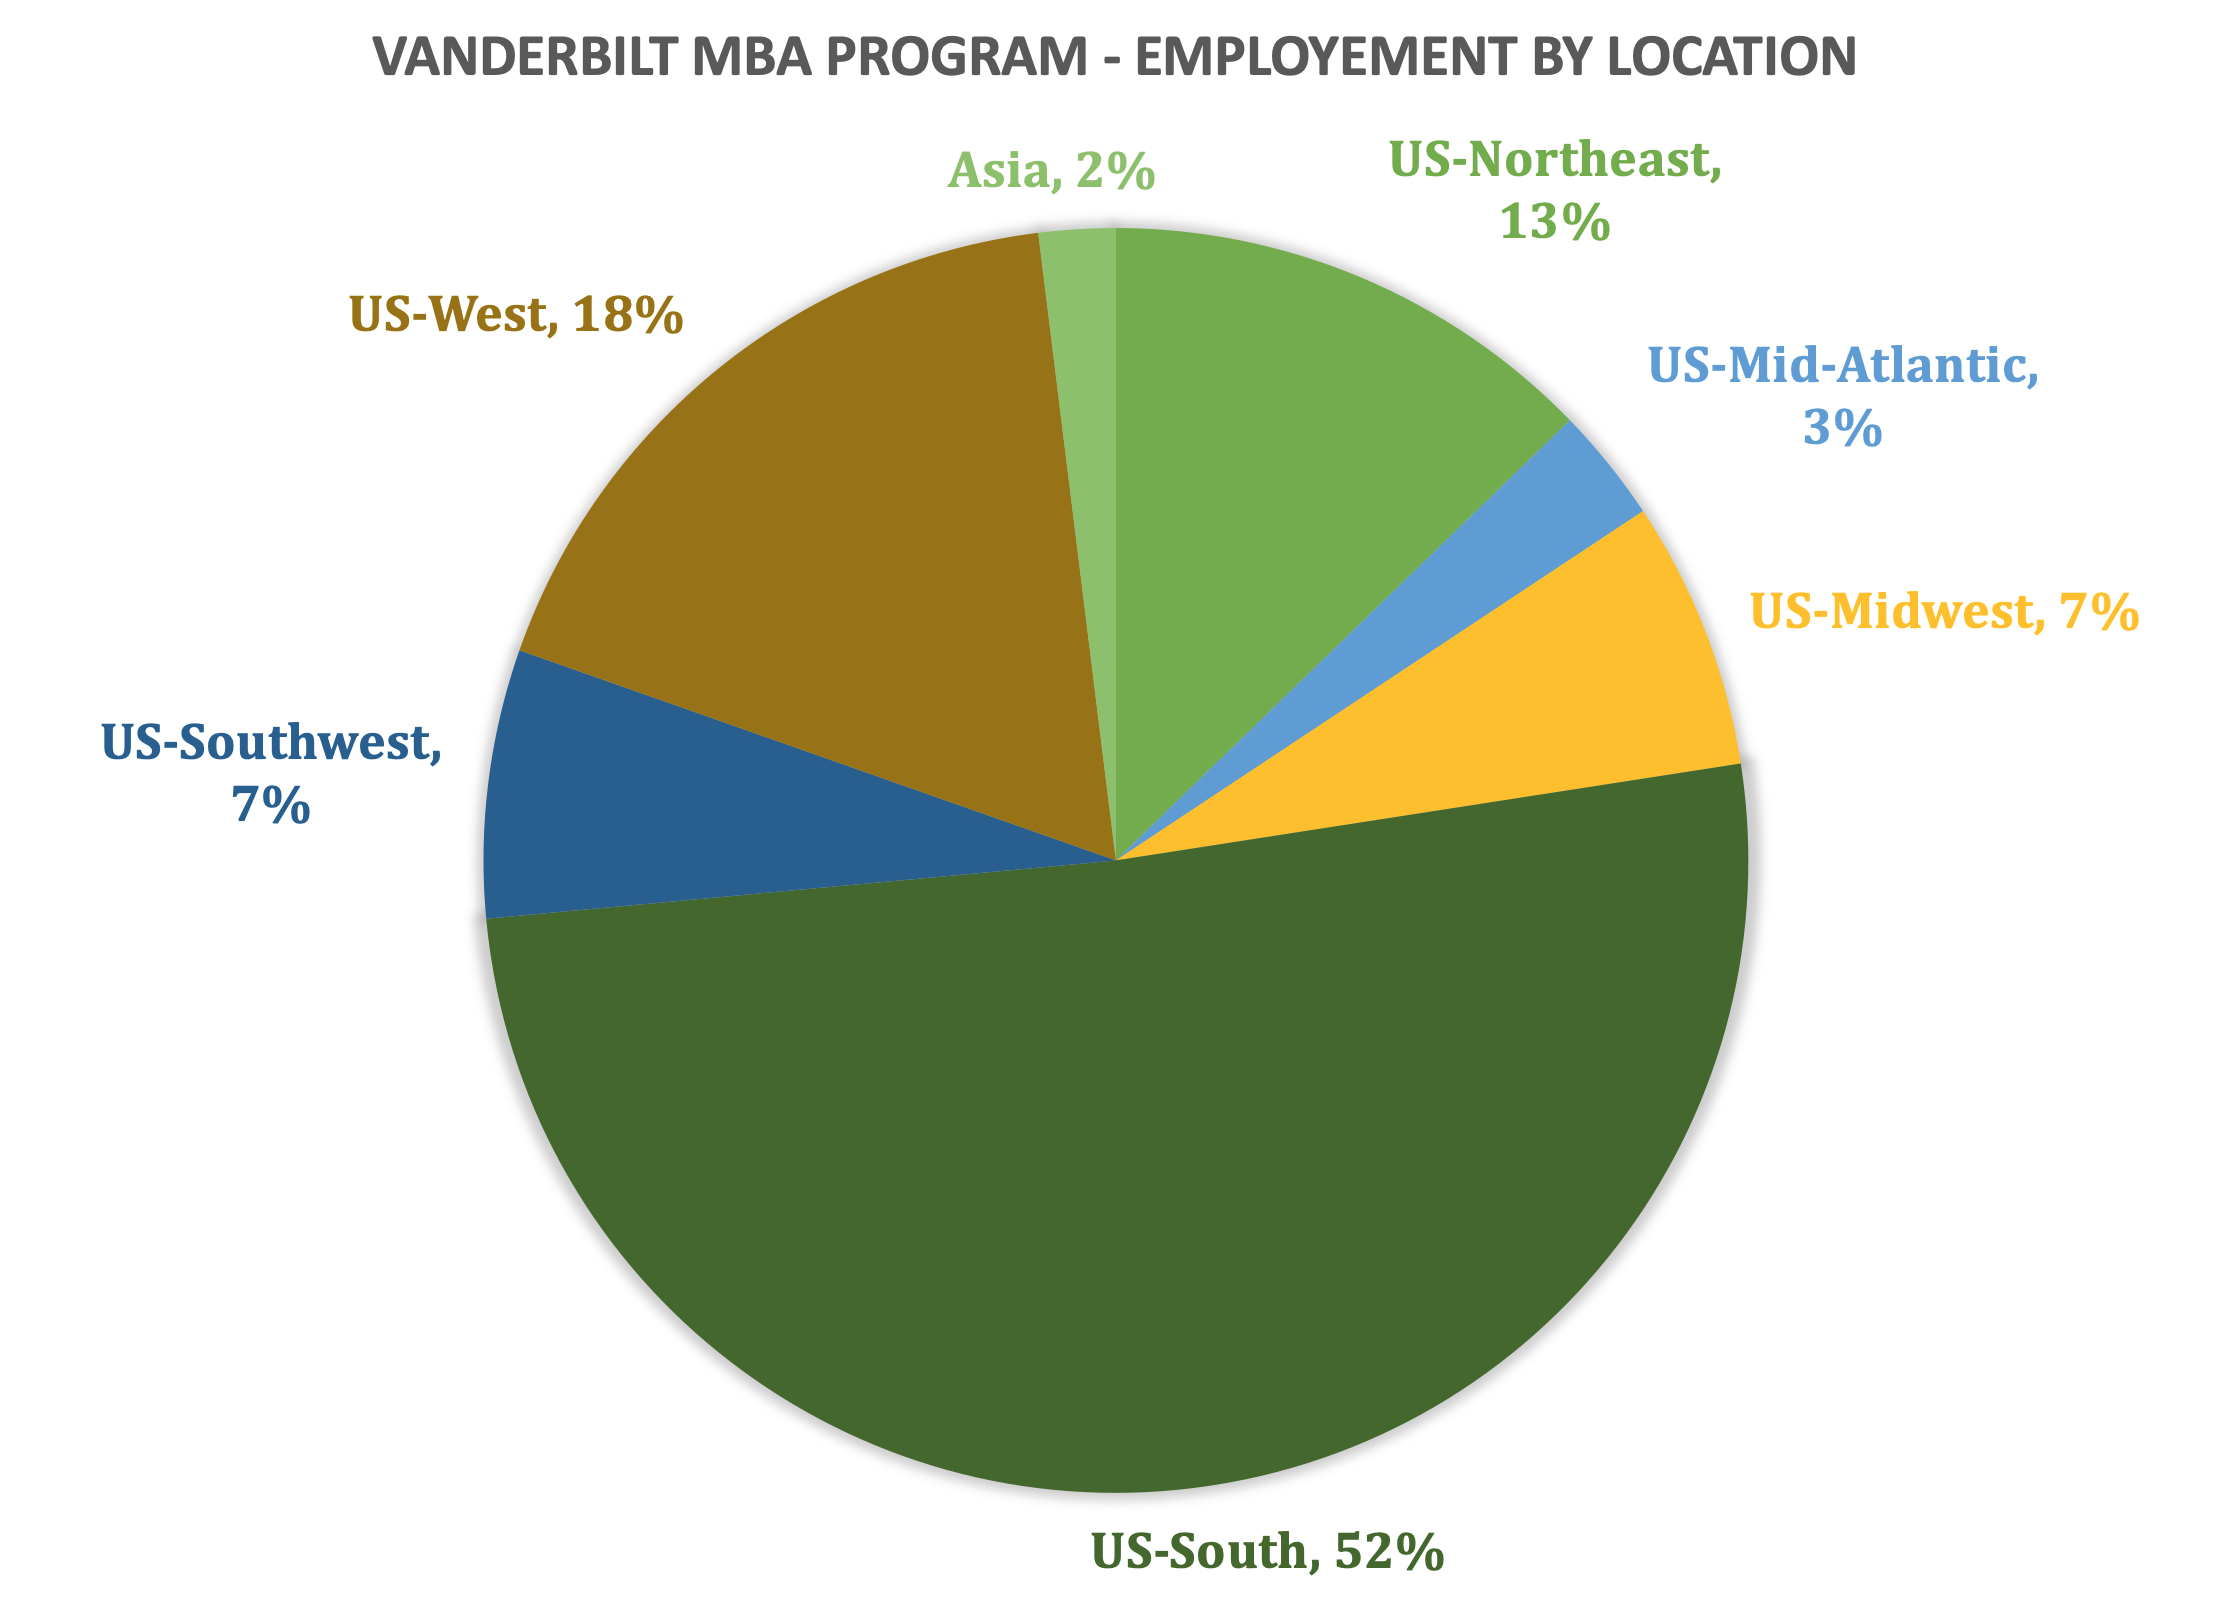 Vanderbilt MBA Program - Vanderbilt Owen Graduate School of Management - Employment by Location